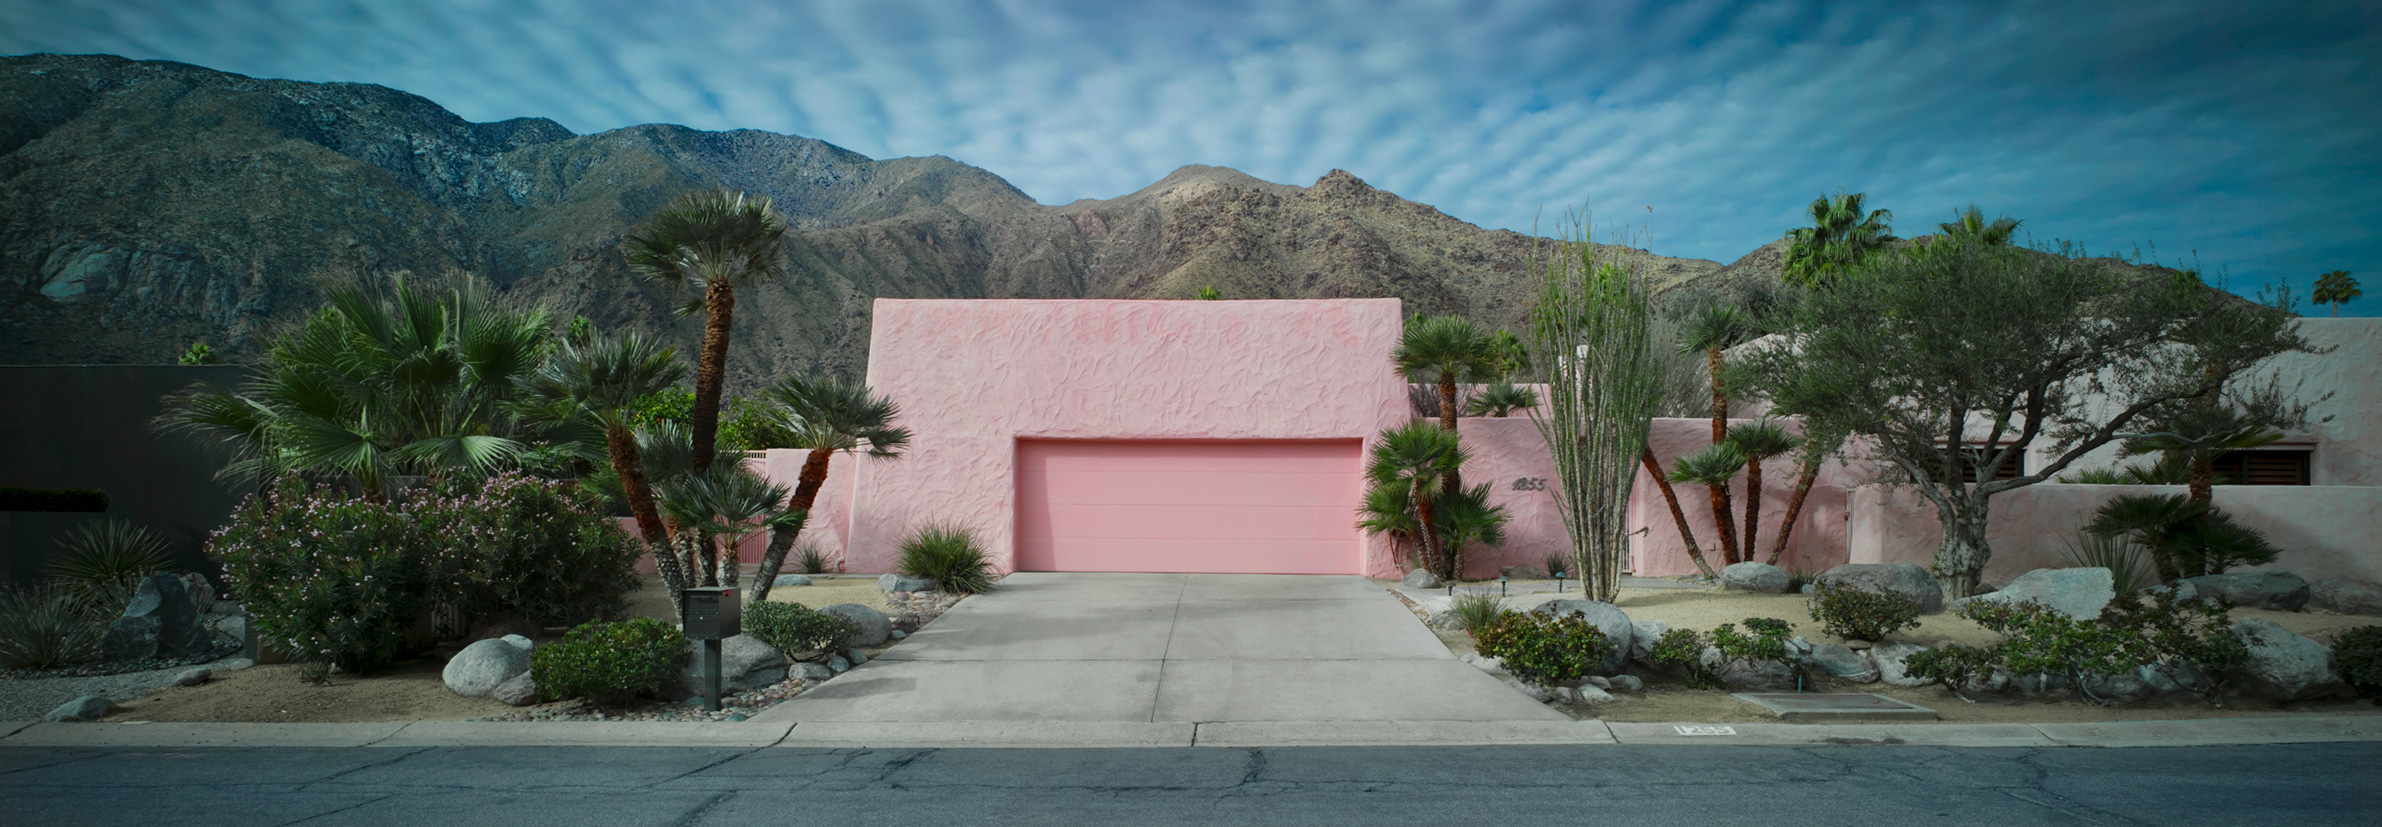 Musilek_Stan_Palm_Springs_Pink_House